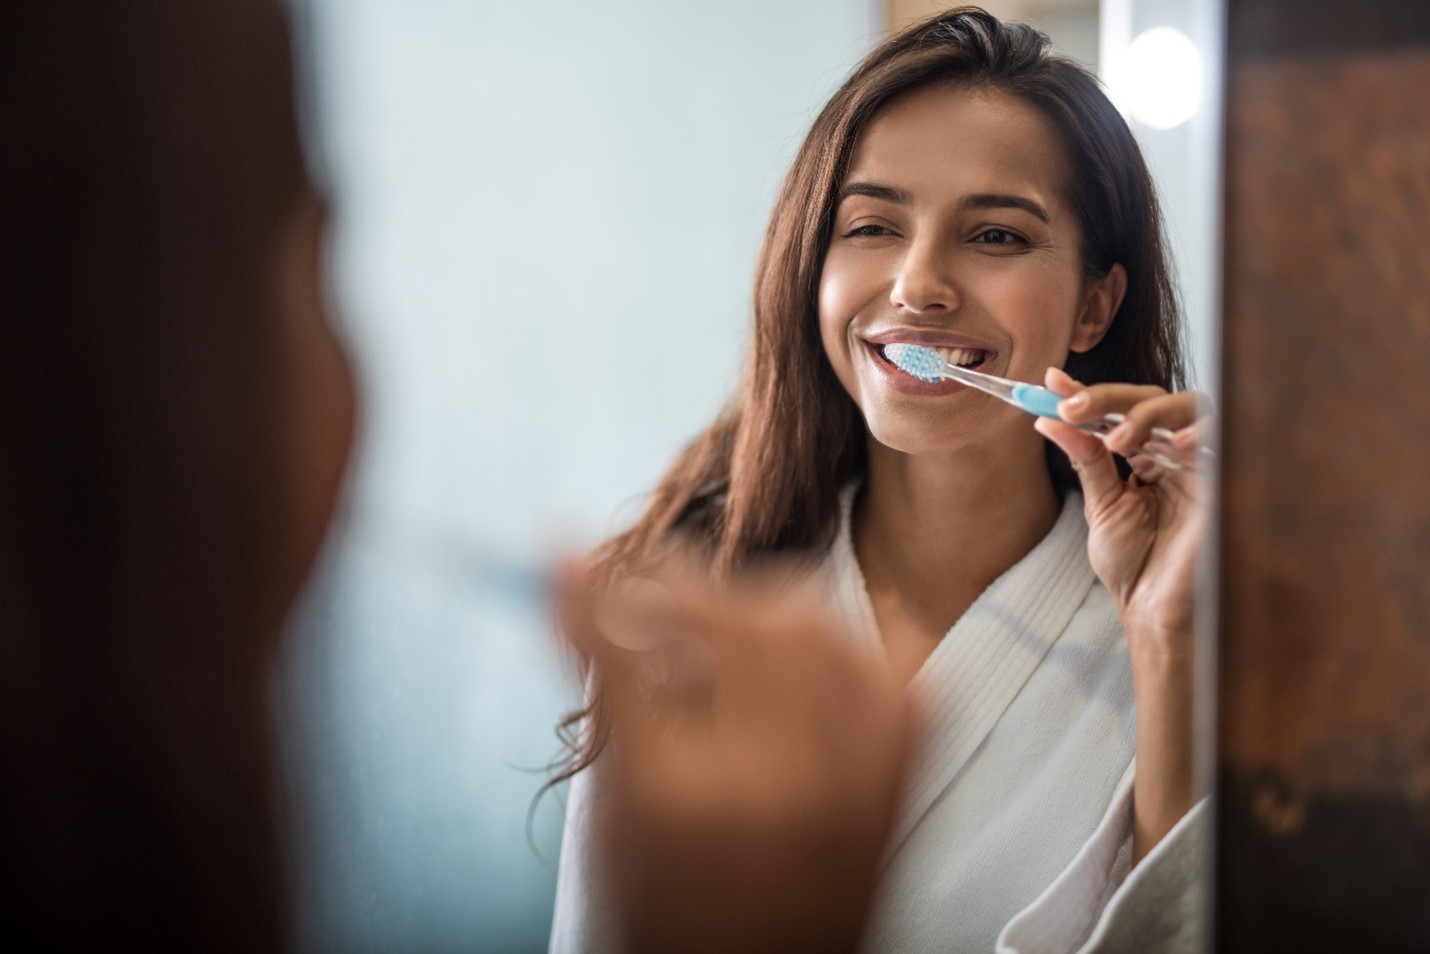 brush teeth image